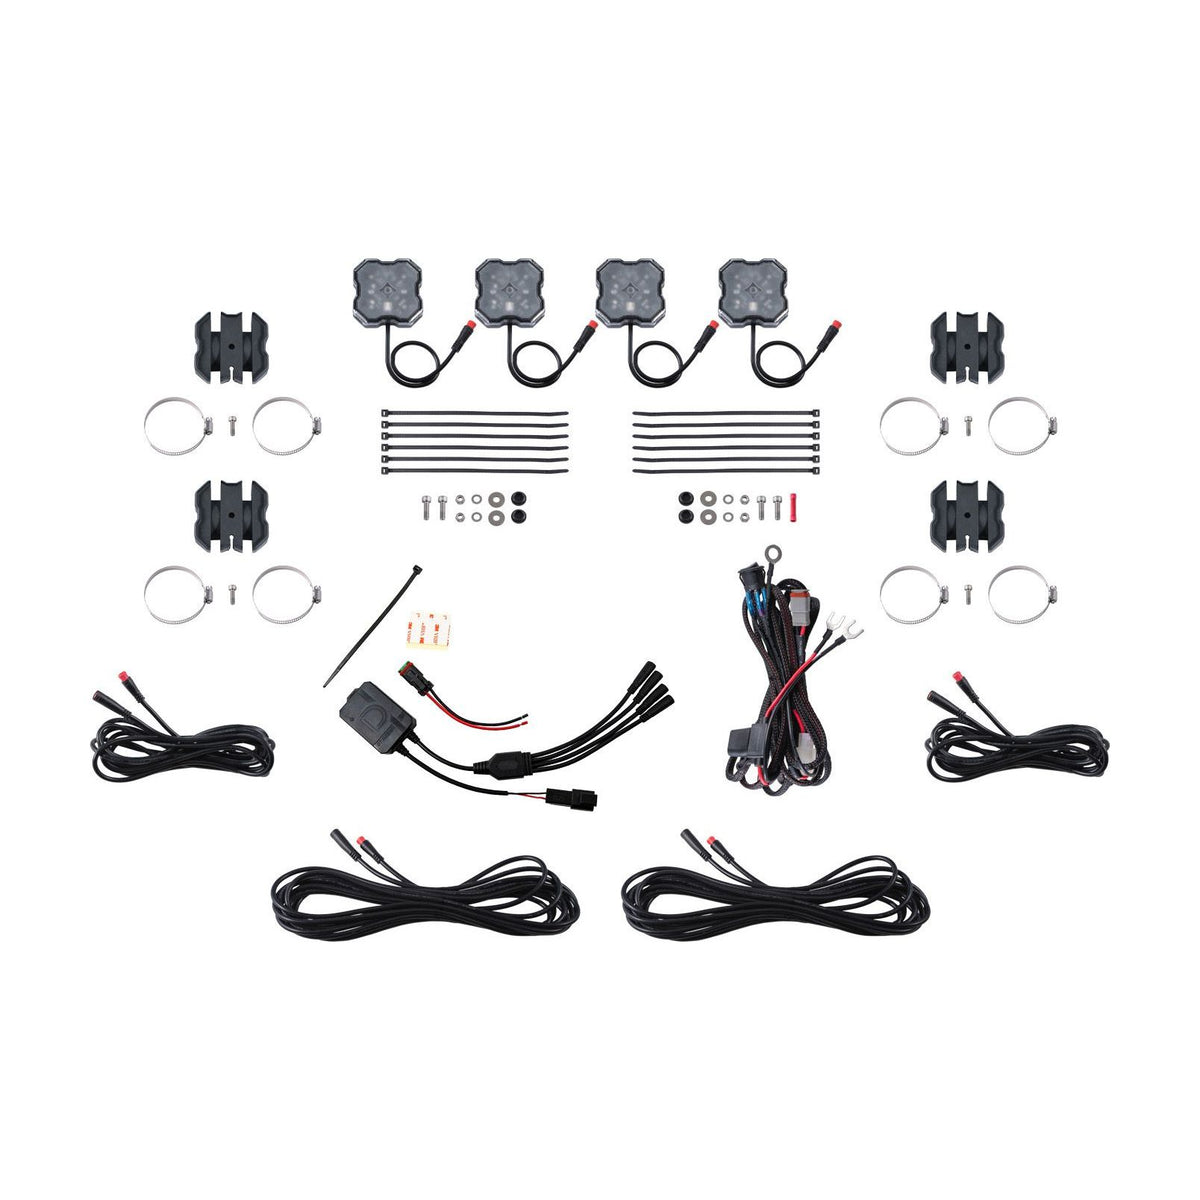 Stage Series Universal Rock Light SXS Installer Kit (4-Pack) | Diode Dynamics